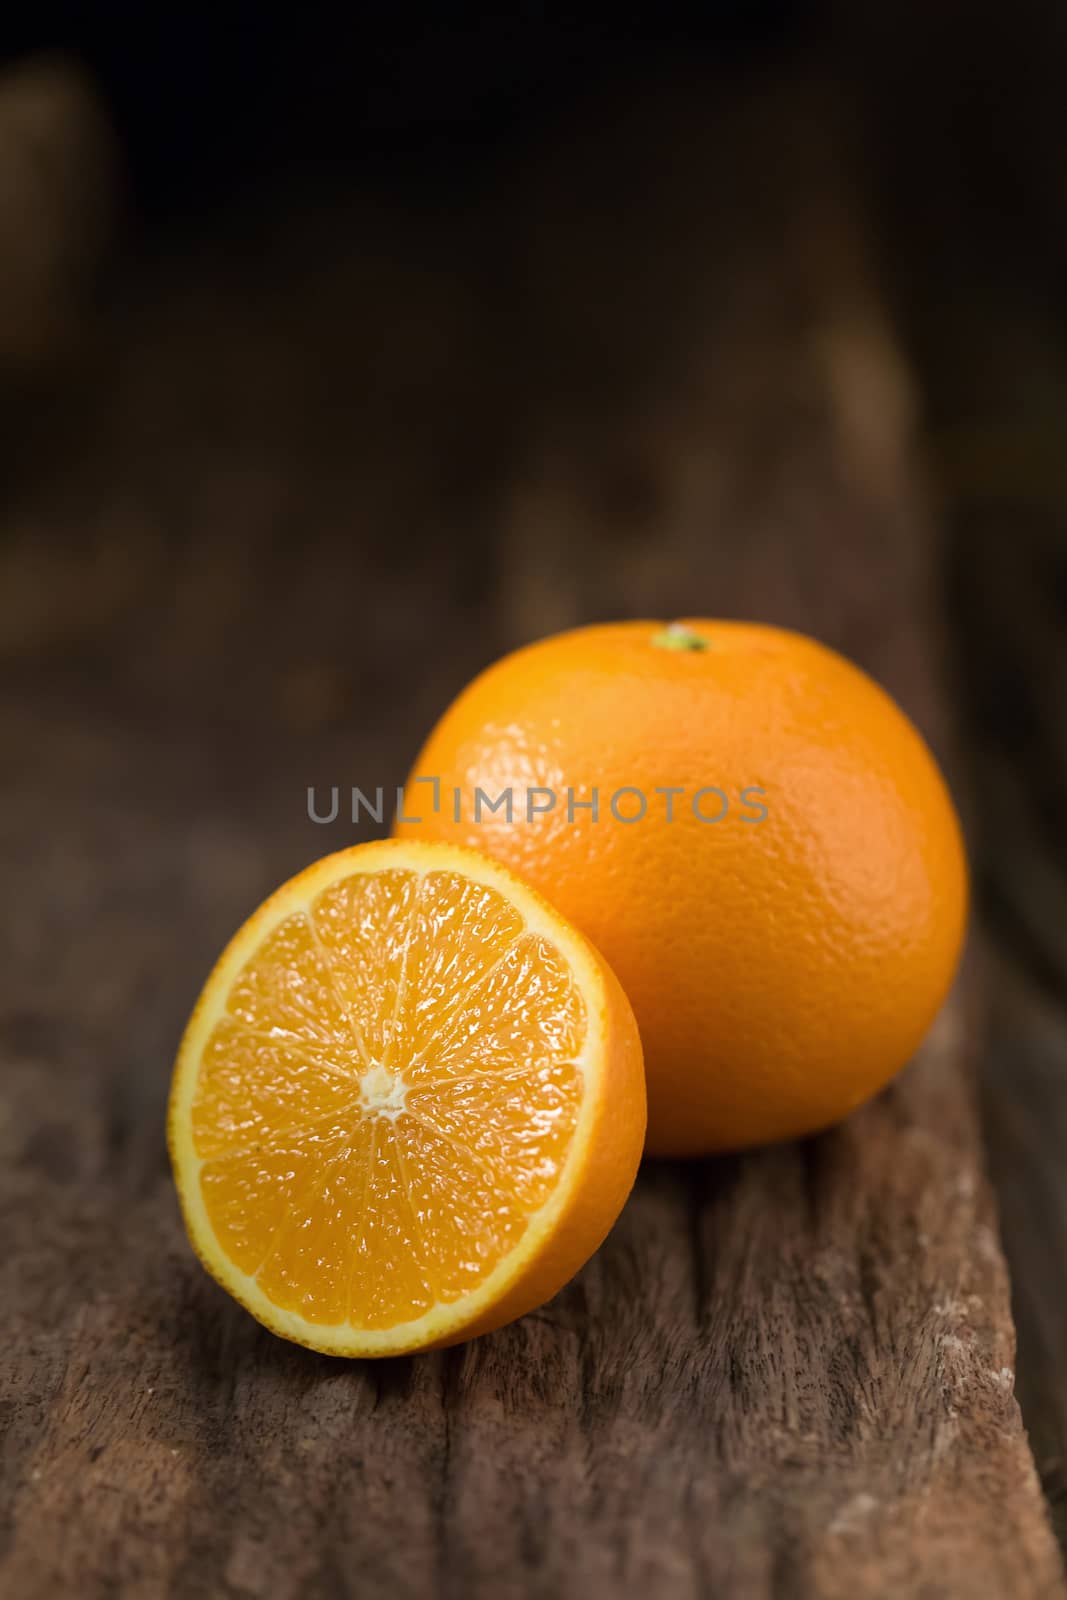 fresh orange and orange slices group on a dark wooden table.